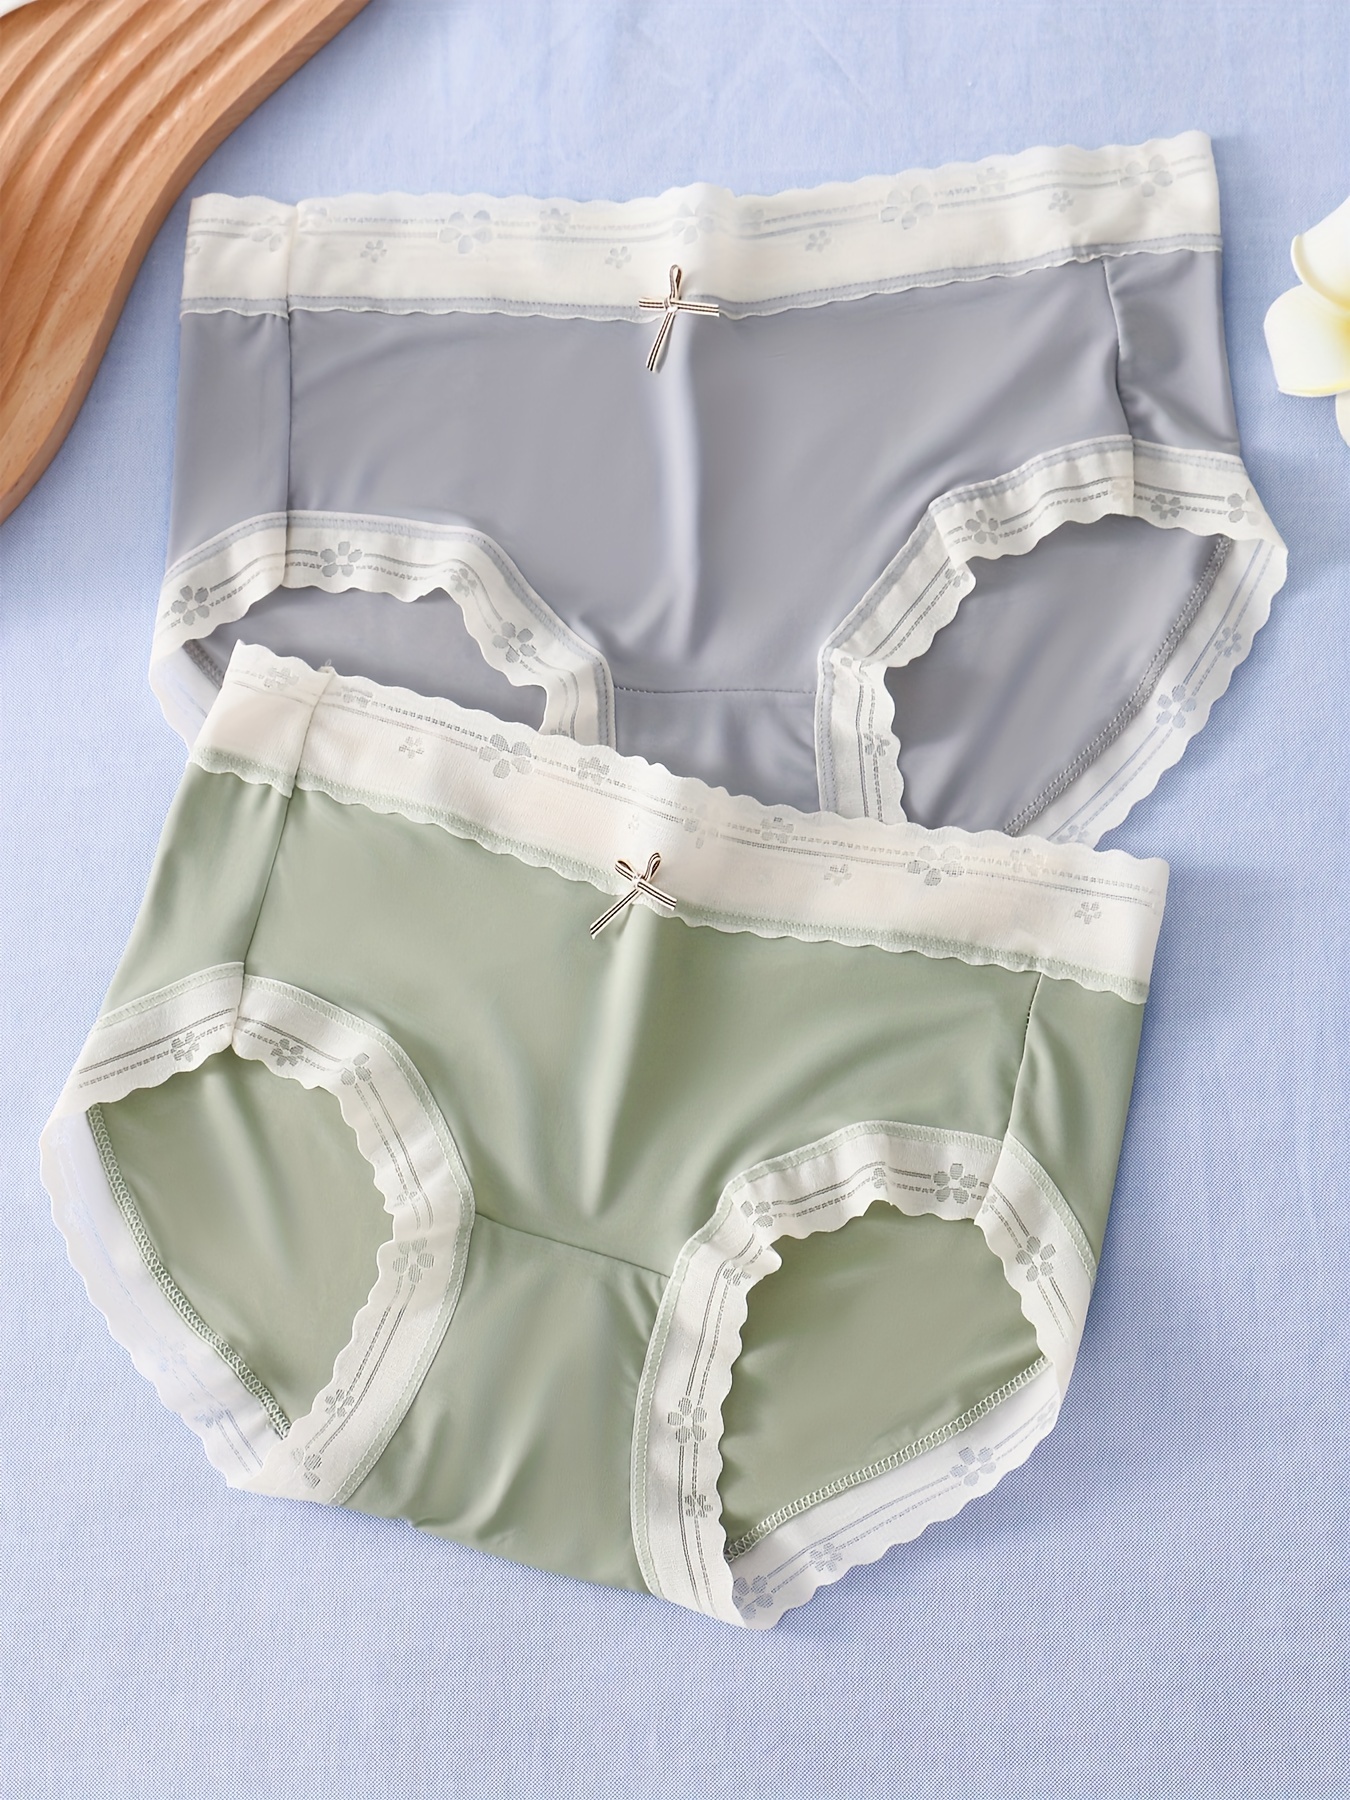 4Pcs Children's Panties 8-14Years Old Teenage Cotton Underwear Sport  Puberty Big Girl's Student Briefs